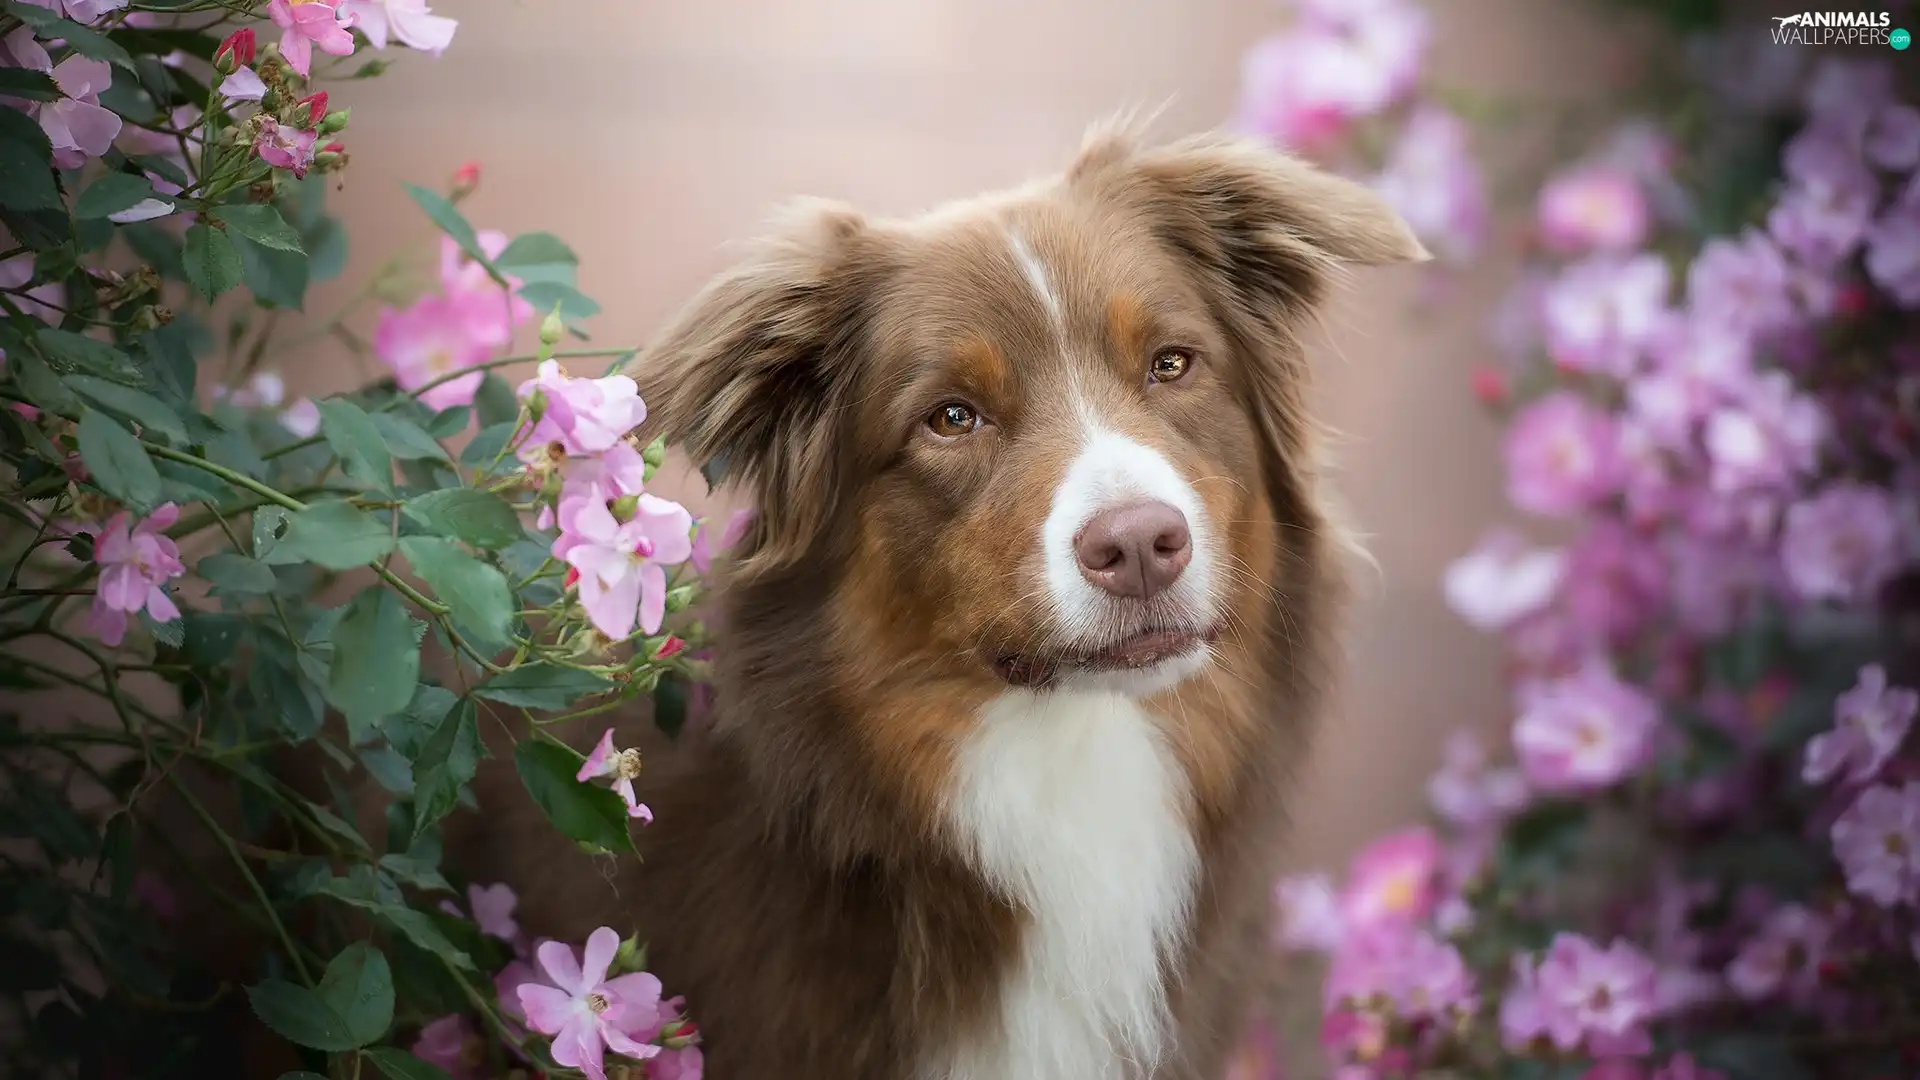 Bush, Flowers, Australian Shepherd, muzzle, dog